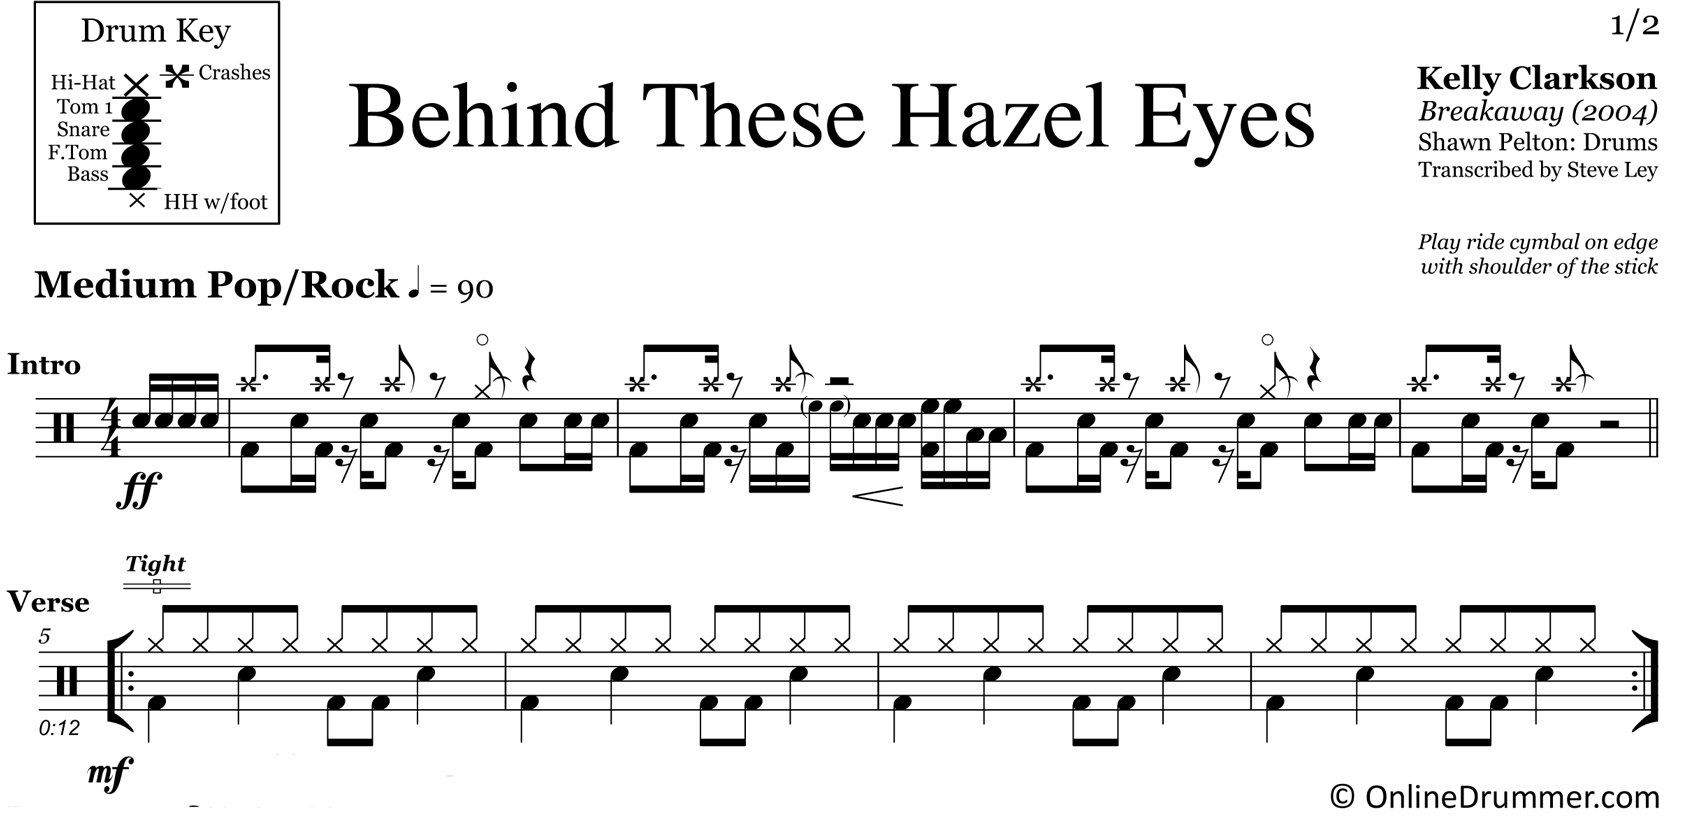 Behind These Hazel Eyes - Kelly Clarkson - Drum Sheet Music